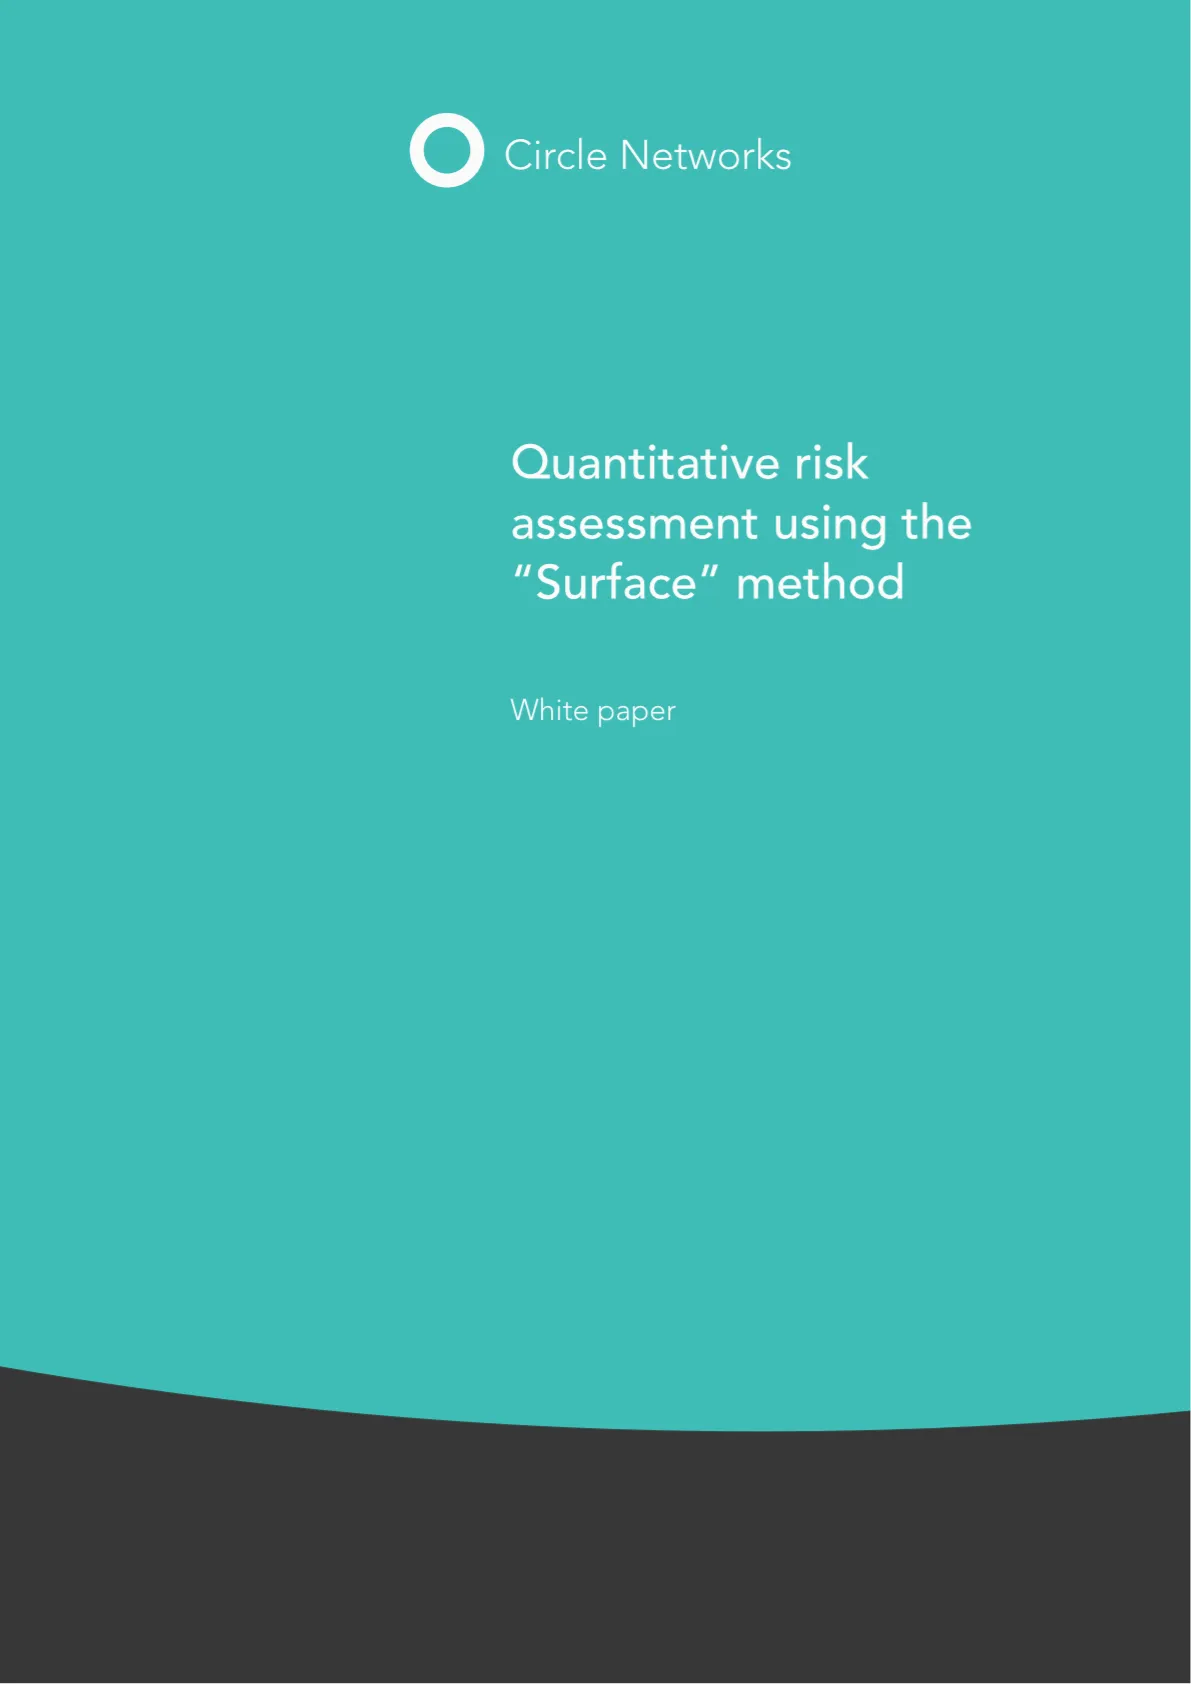 Quantitative Risikoanalyse nach der Surface-Methode